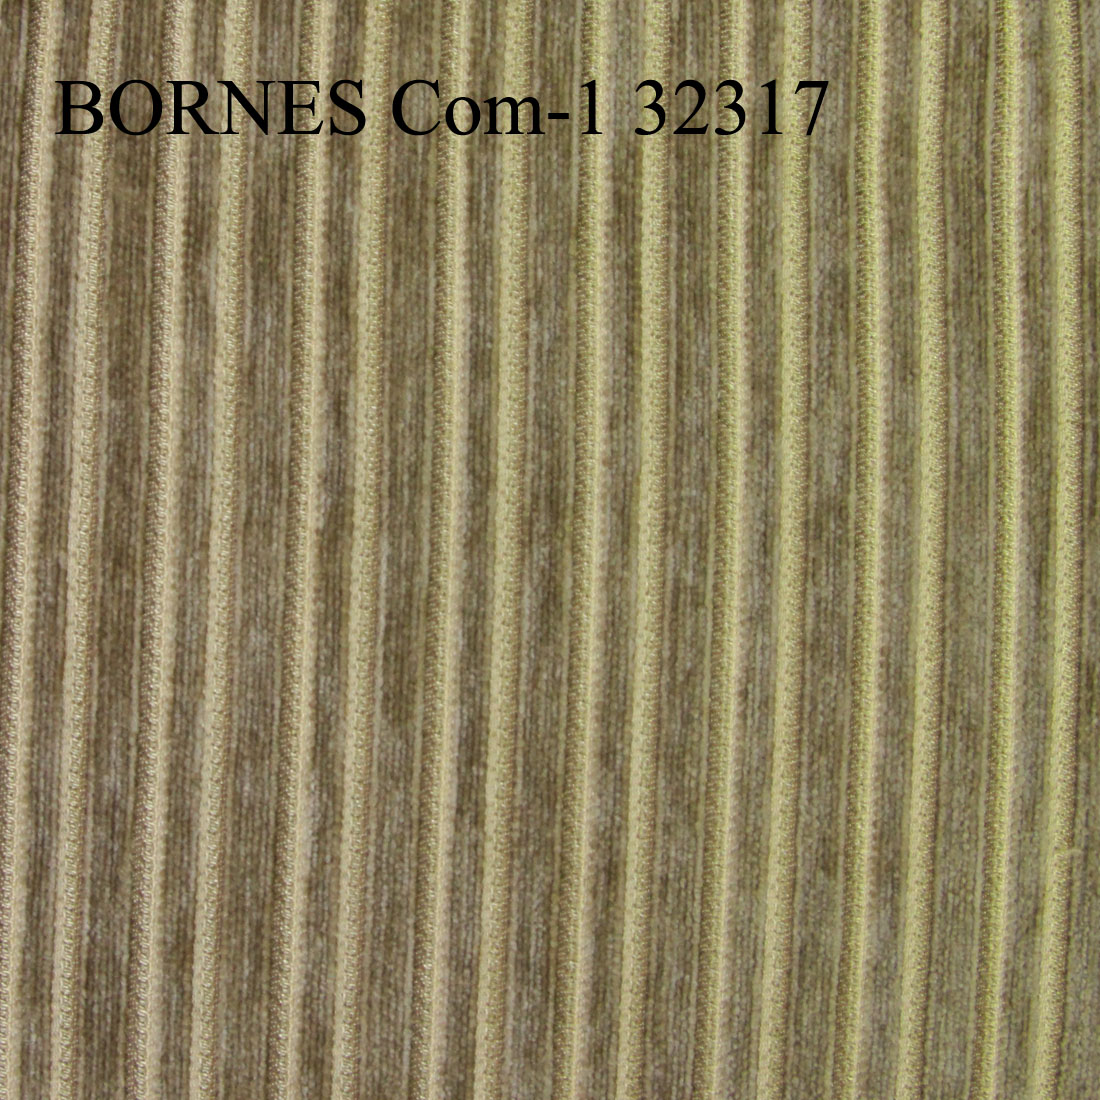 COM BORNES 32317